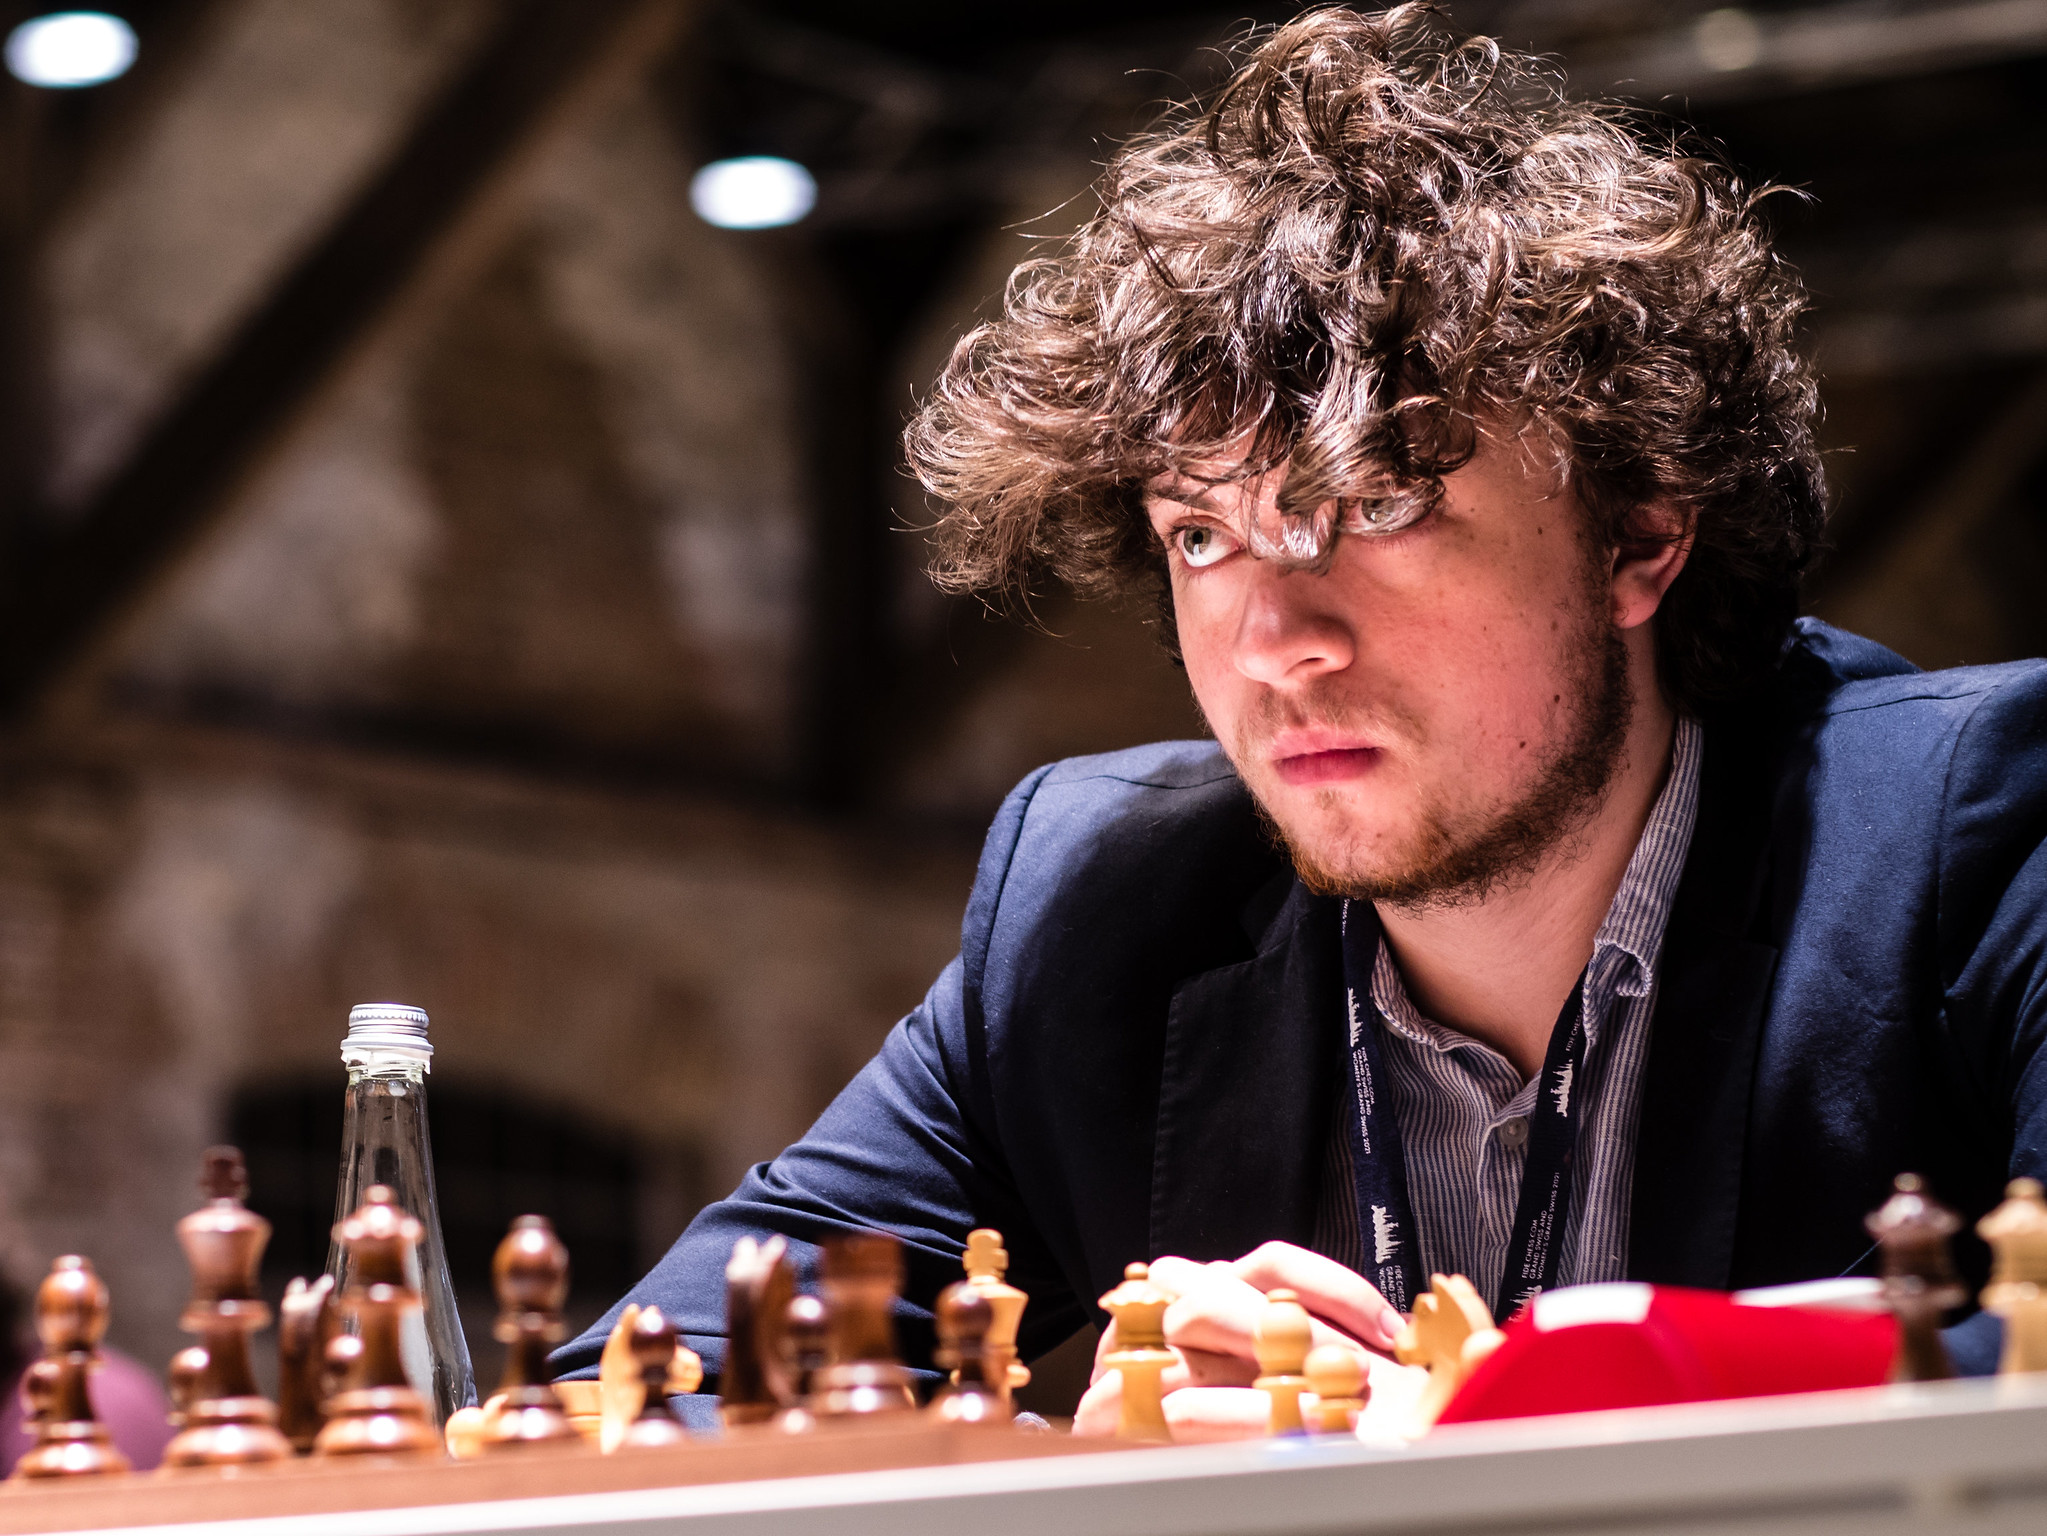 Hans Niemann bangs the table in despair! 😳 #chess #chessgame #chessboard  #chessplayer